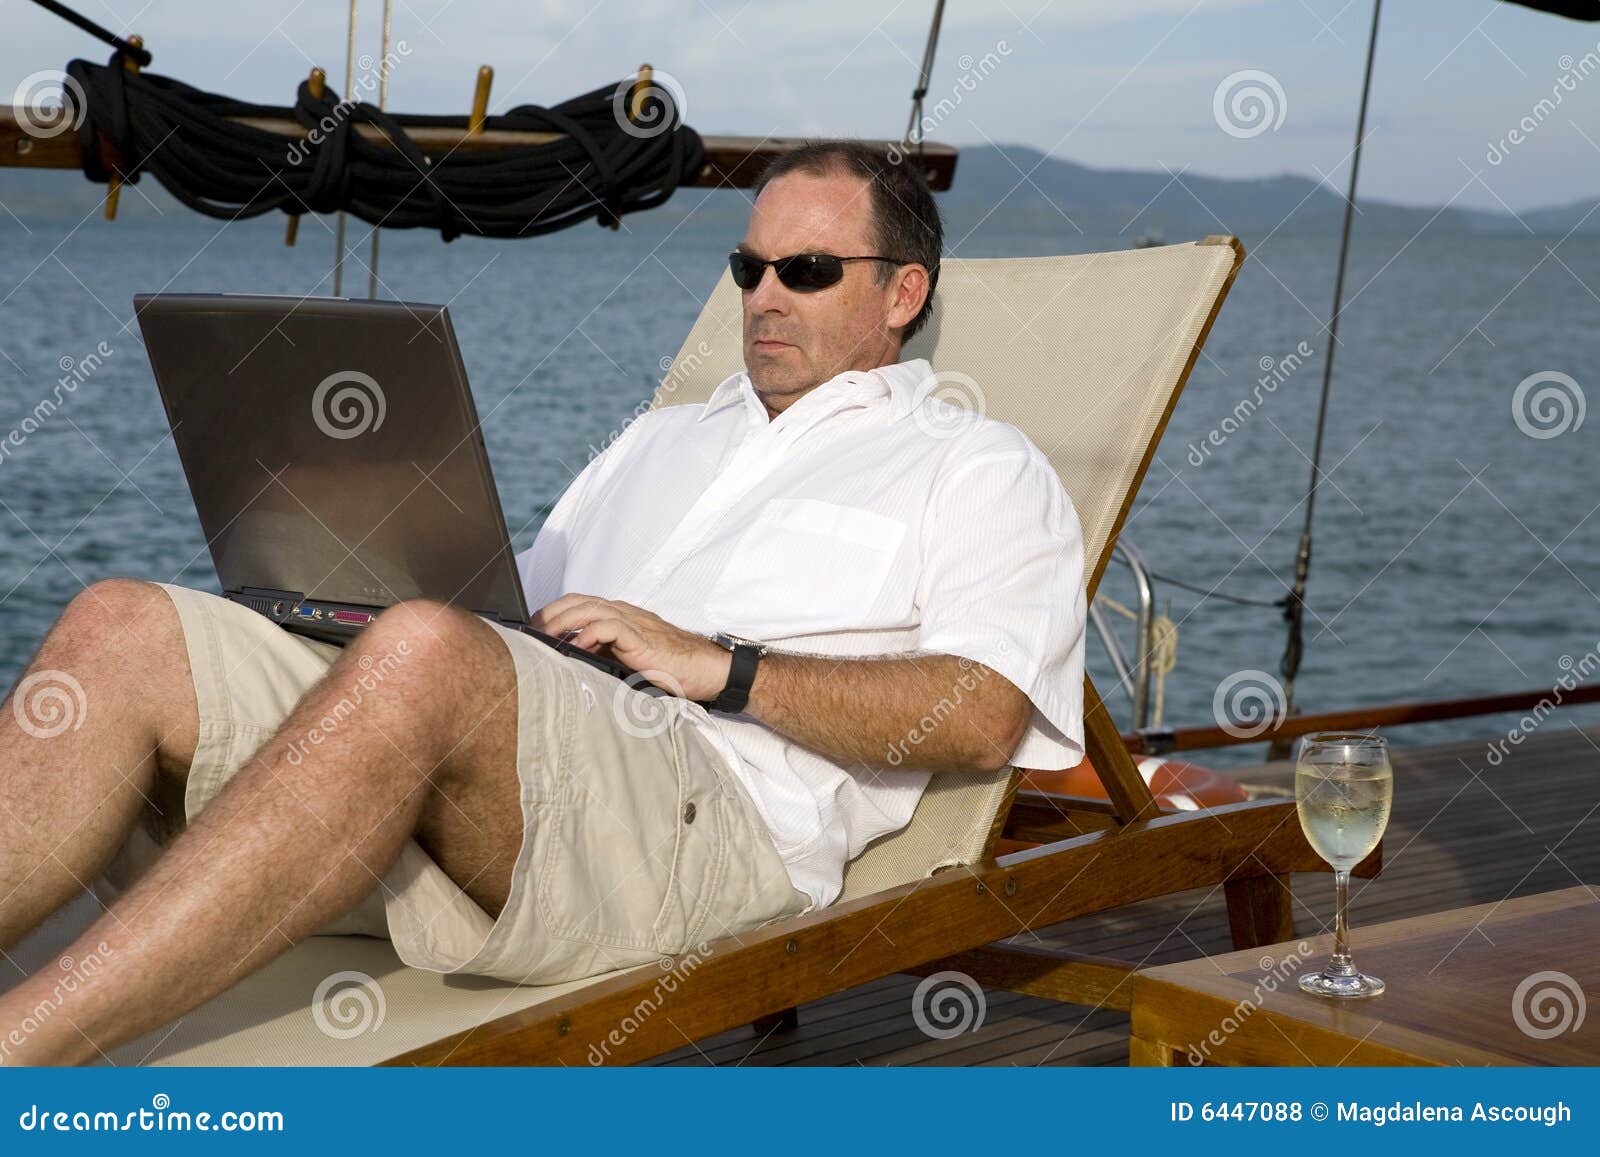 man-deck-yacht-laptop-6447088.jpg